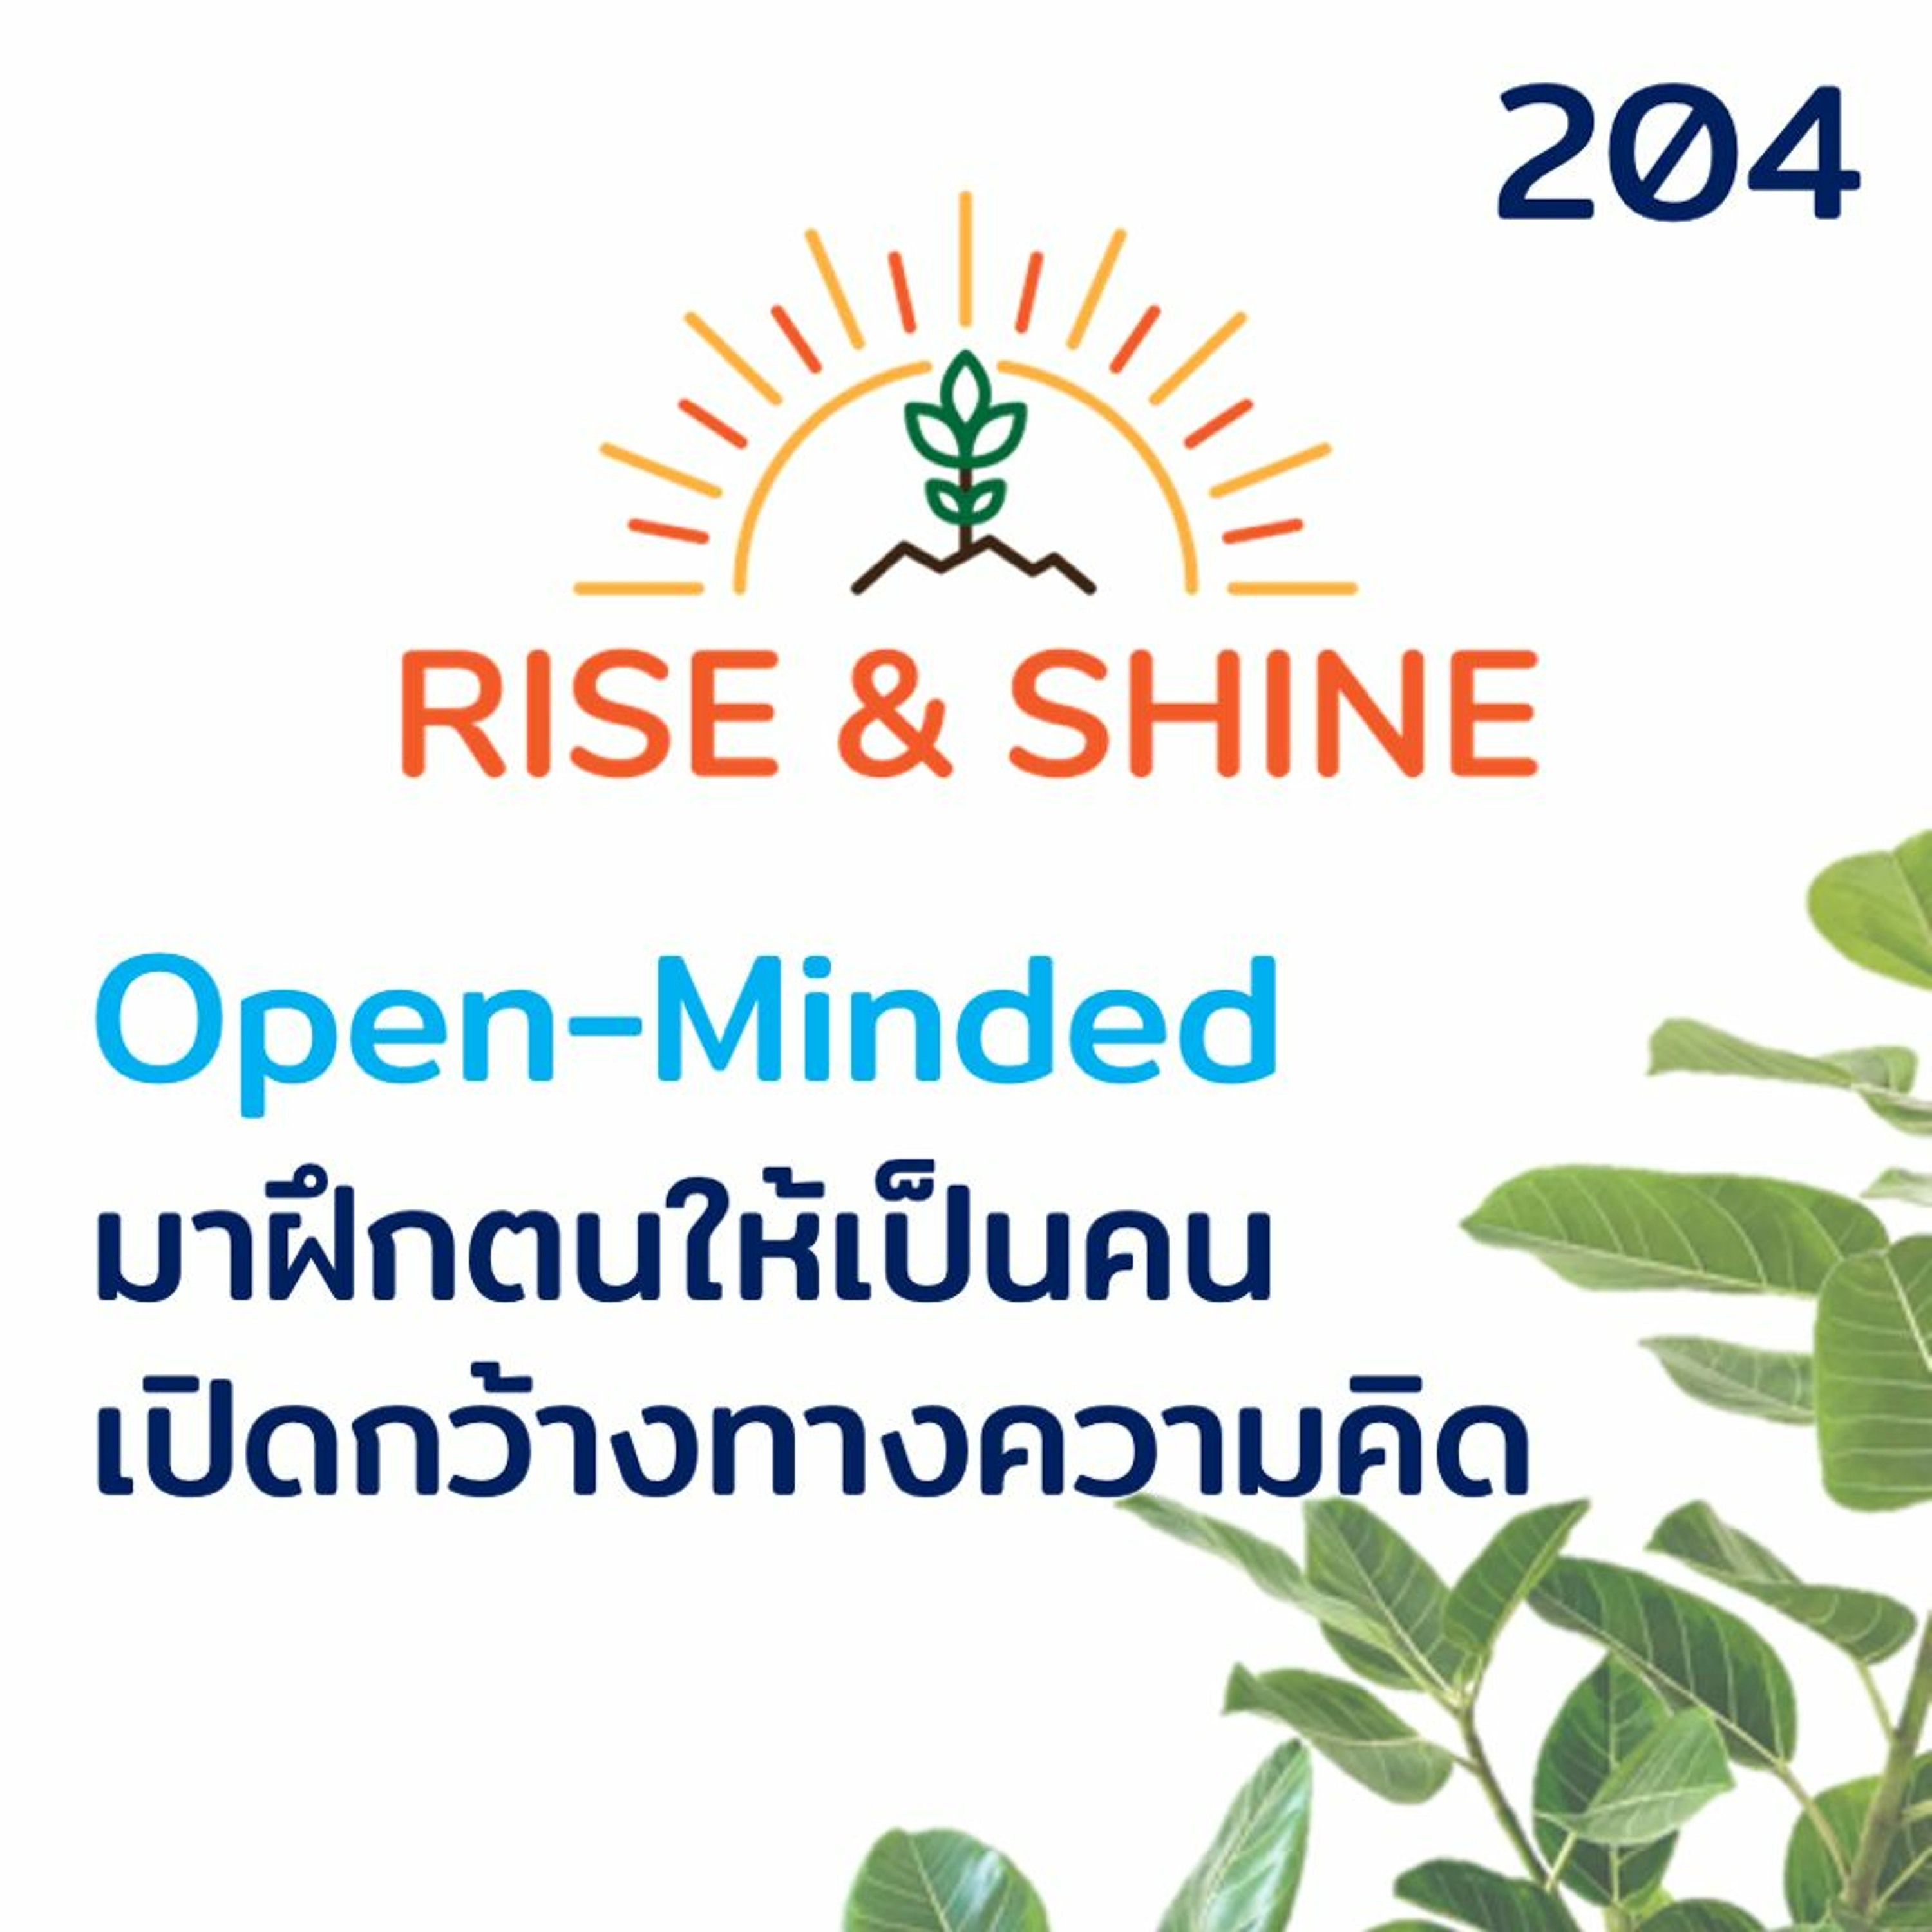 Rise & Shine 204 Open-Minded มาฝึกตนให้เป็นคนเปิดกว้างทางความคิดกัน